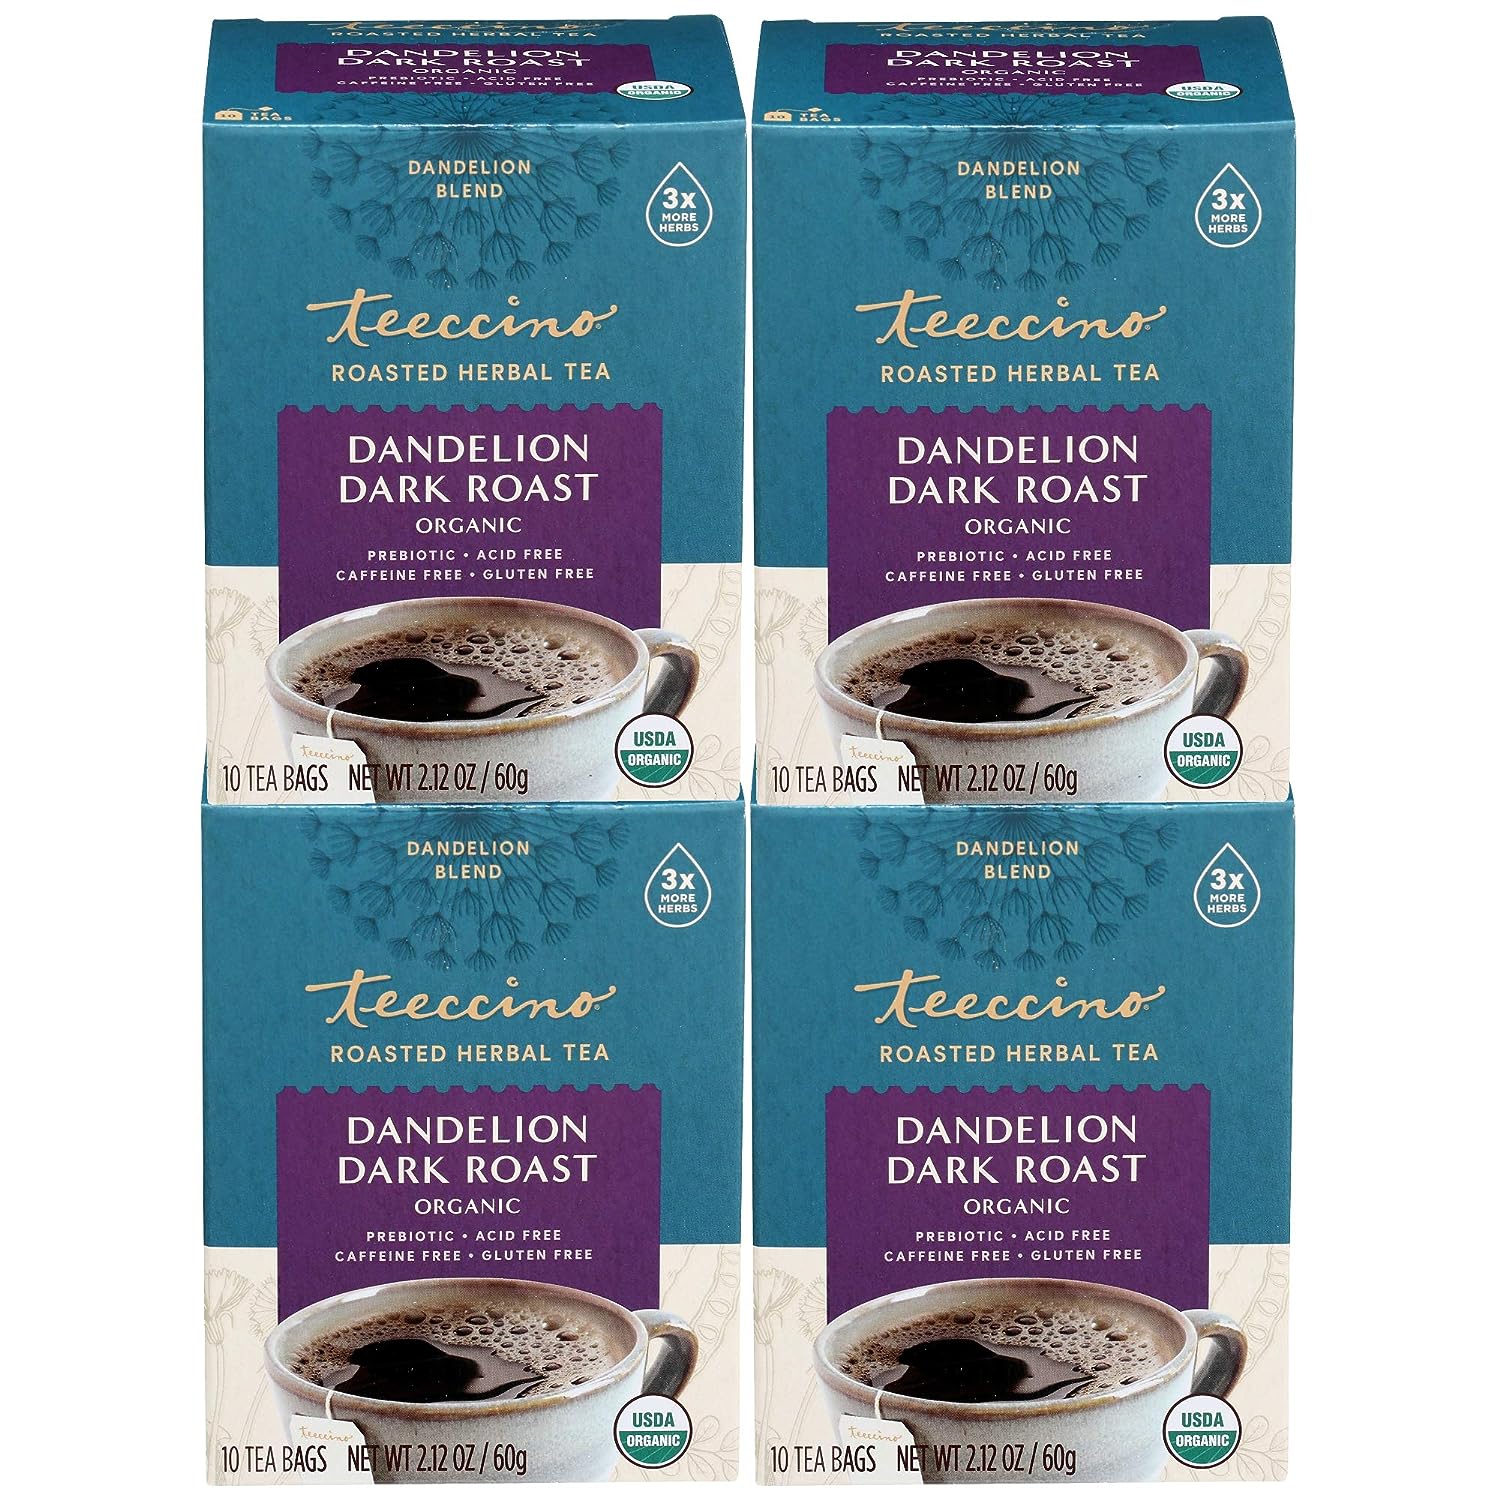 Teeccino Dandelion Root Tea - Dark Roast - Caffeine Free, Organic, Roasted Herbal Tea with Prebiotics, 3x More Herbs than Regular Tea Bags - Gluten-Free, Acid-Free Coffee Alternative - 10 Tea Bags (Pack of 4)